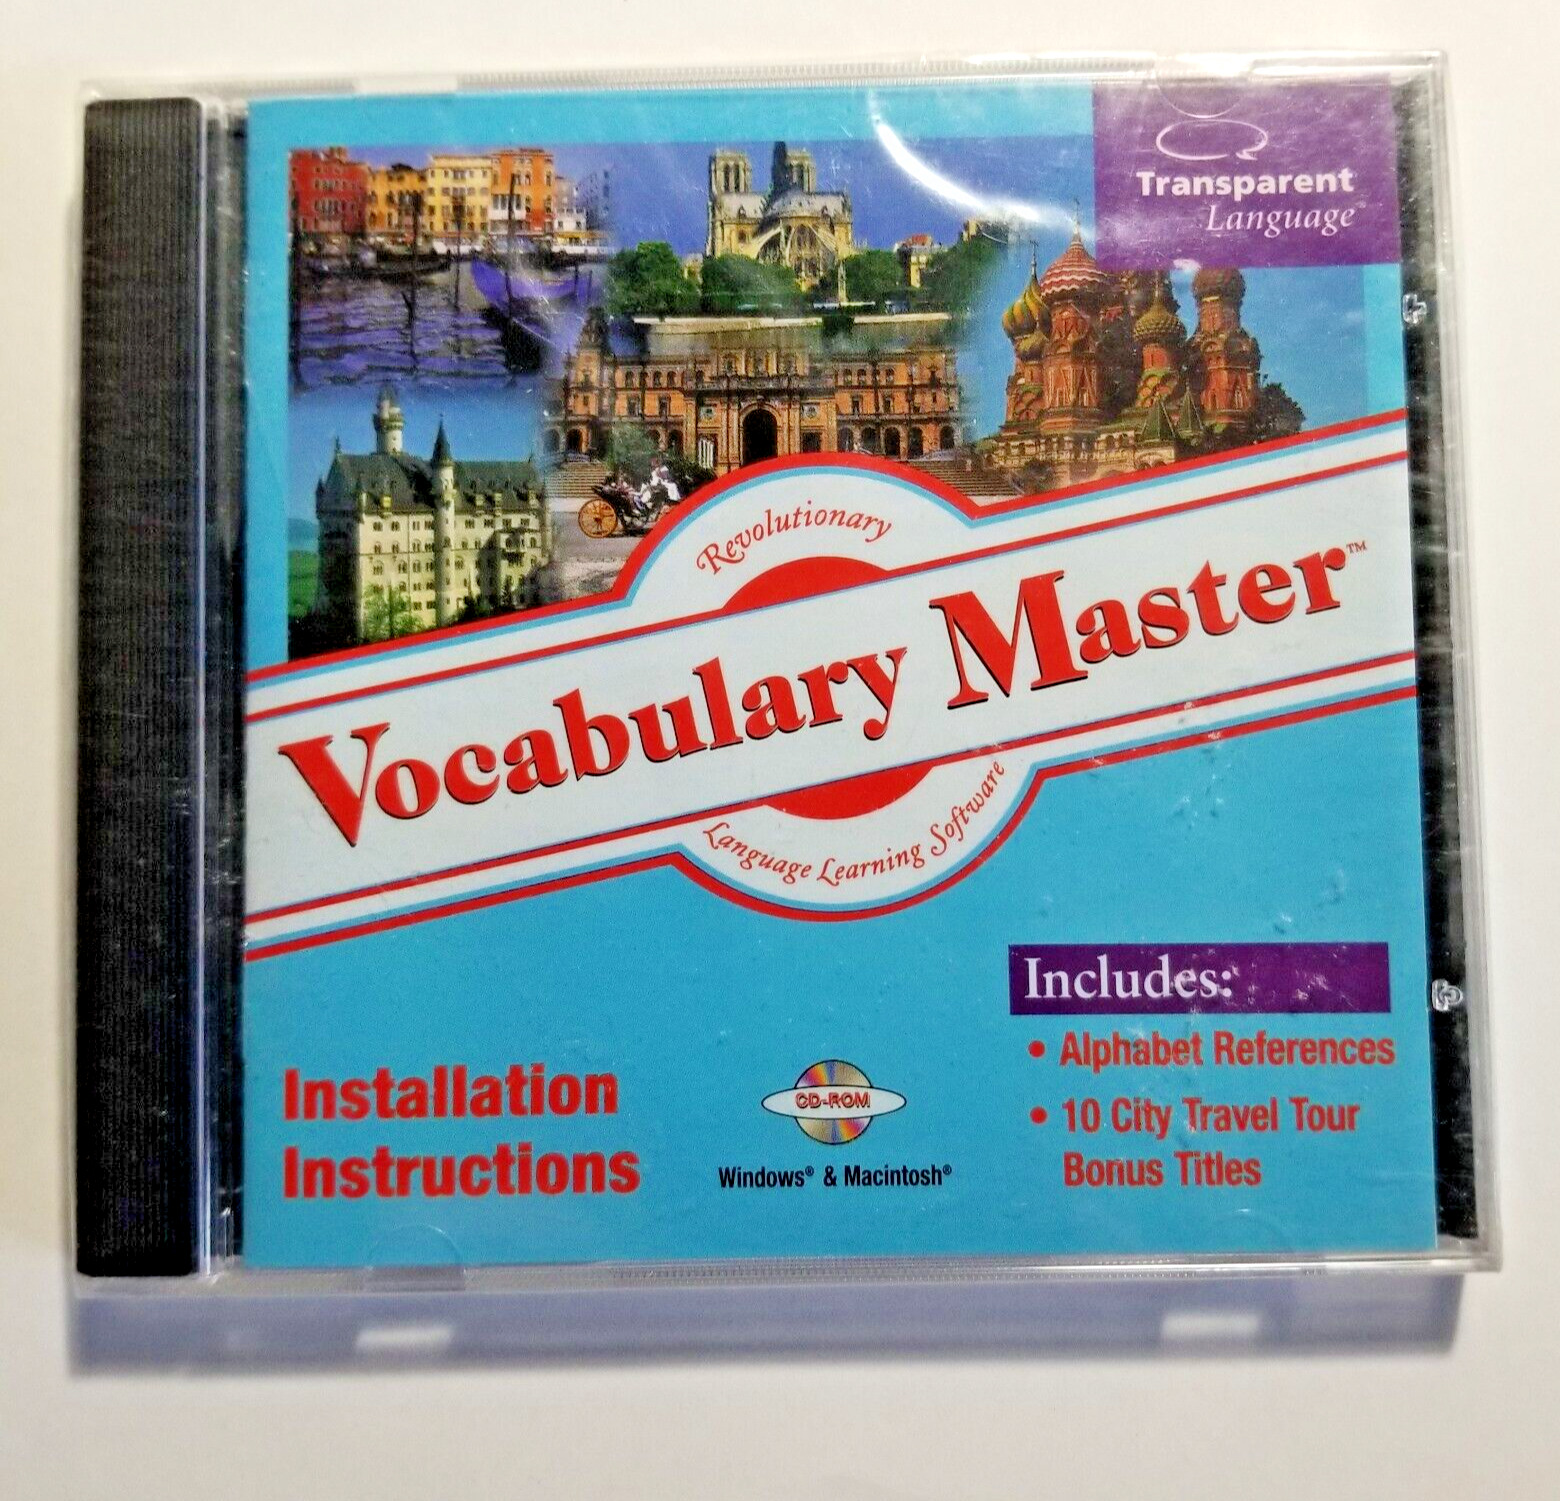 Vocabulary Master CD-ROM Revolutionary Language Learning Software SEALED